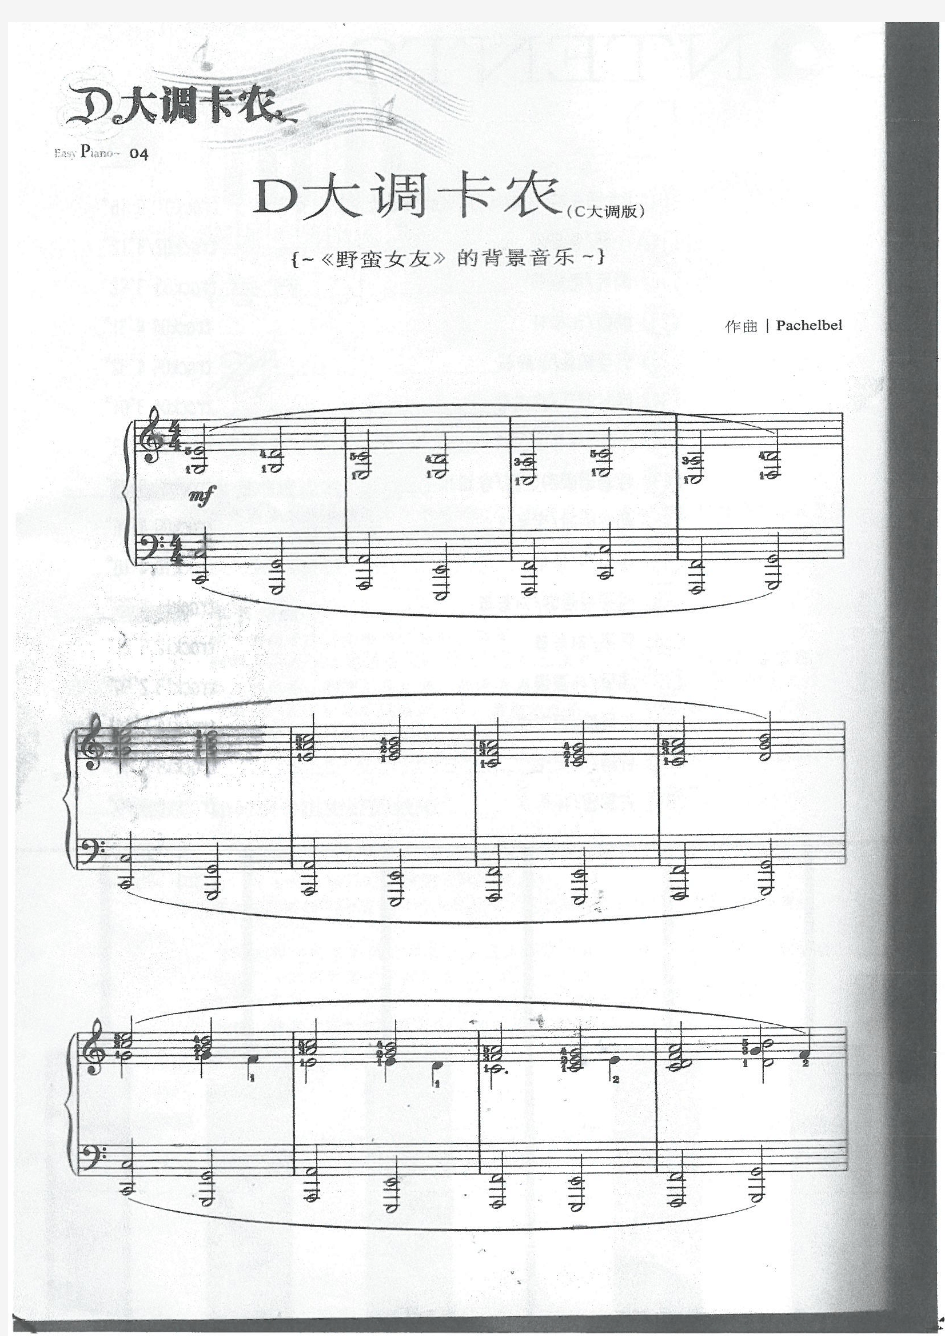 D大调卡农 (C大调版本)钢琴谱